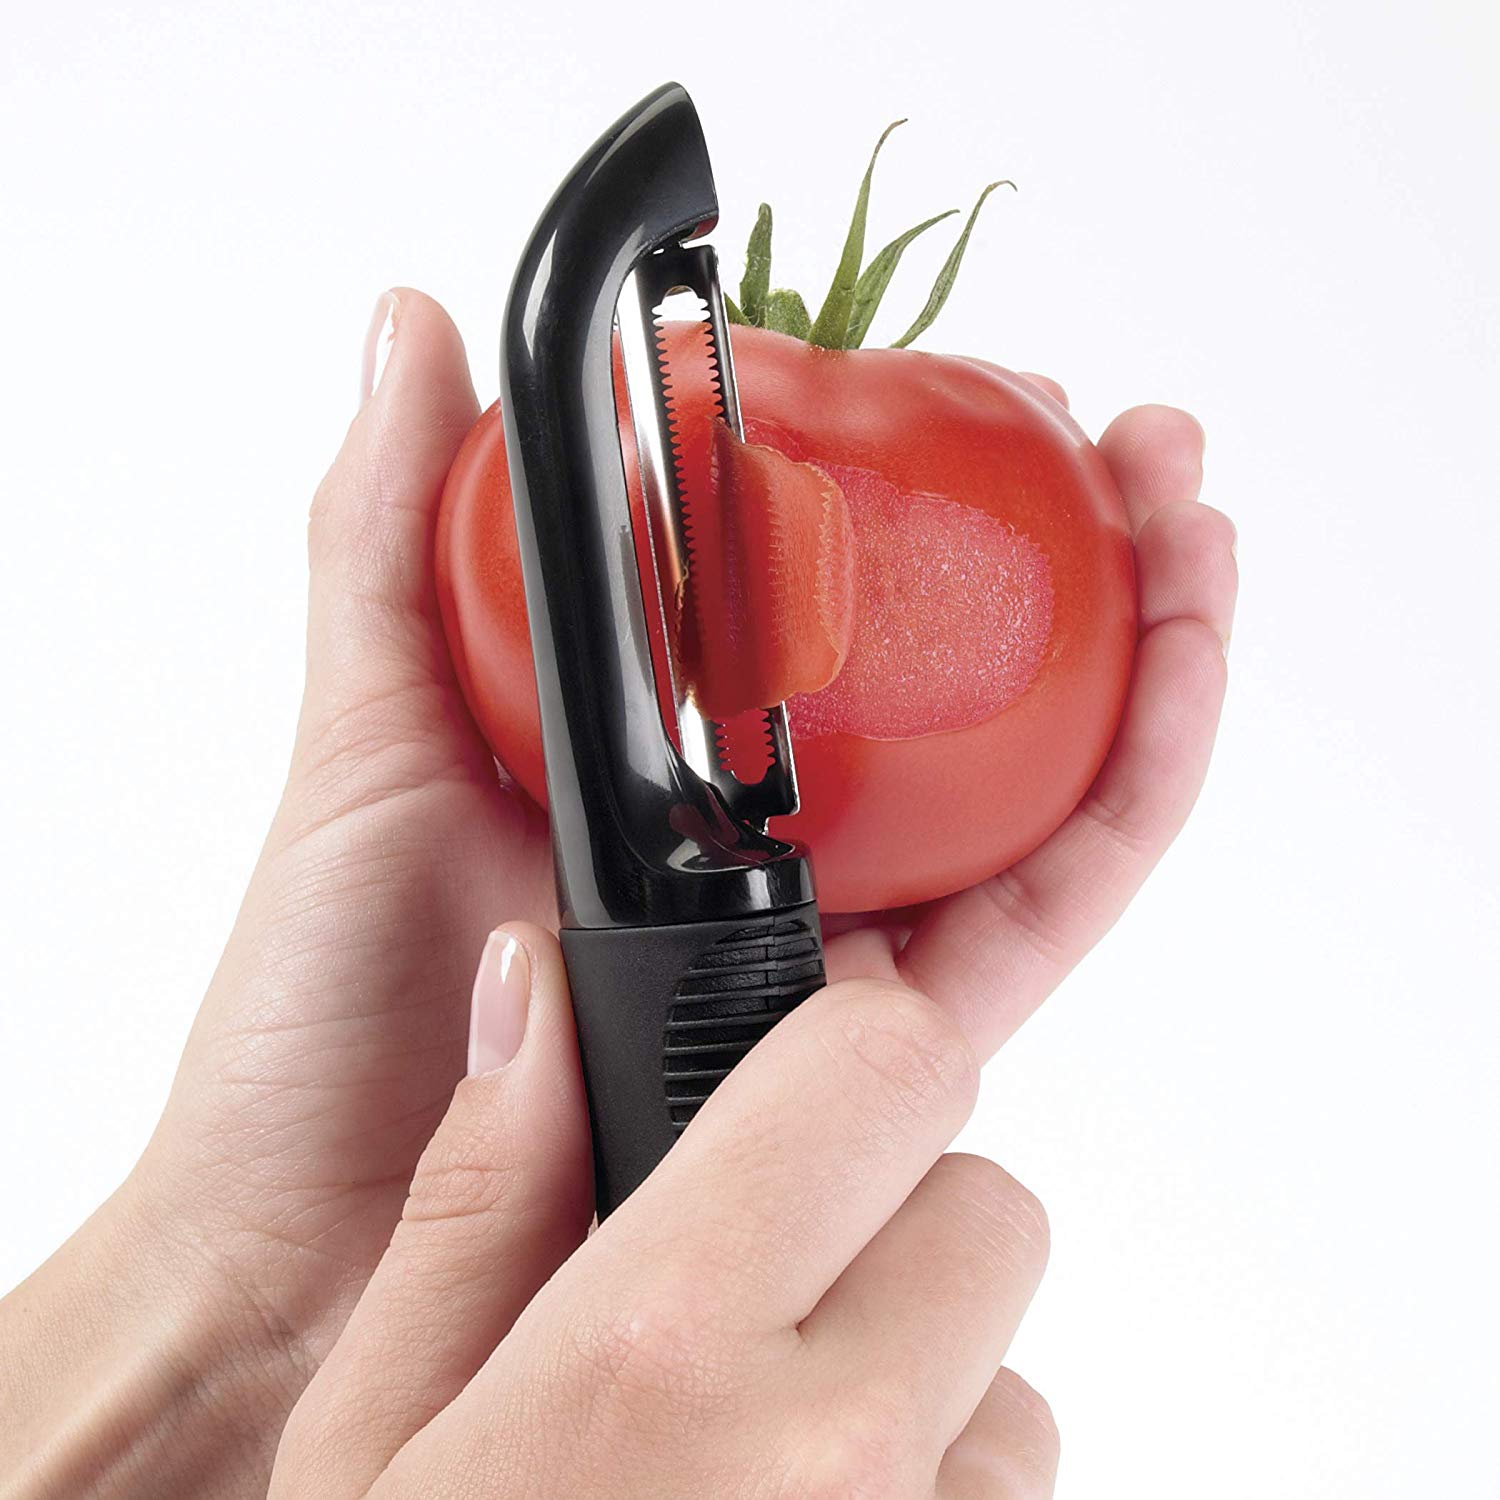 peeling a tomato using a serrated peeler